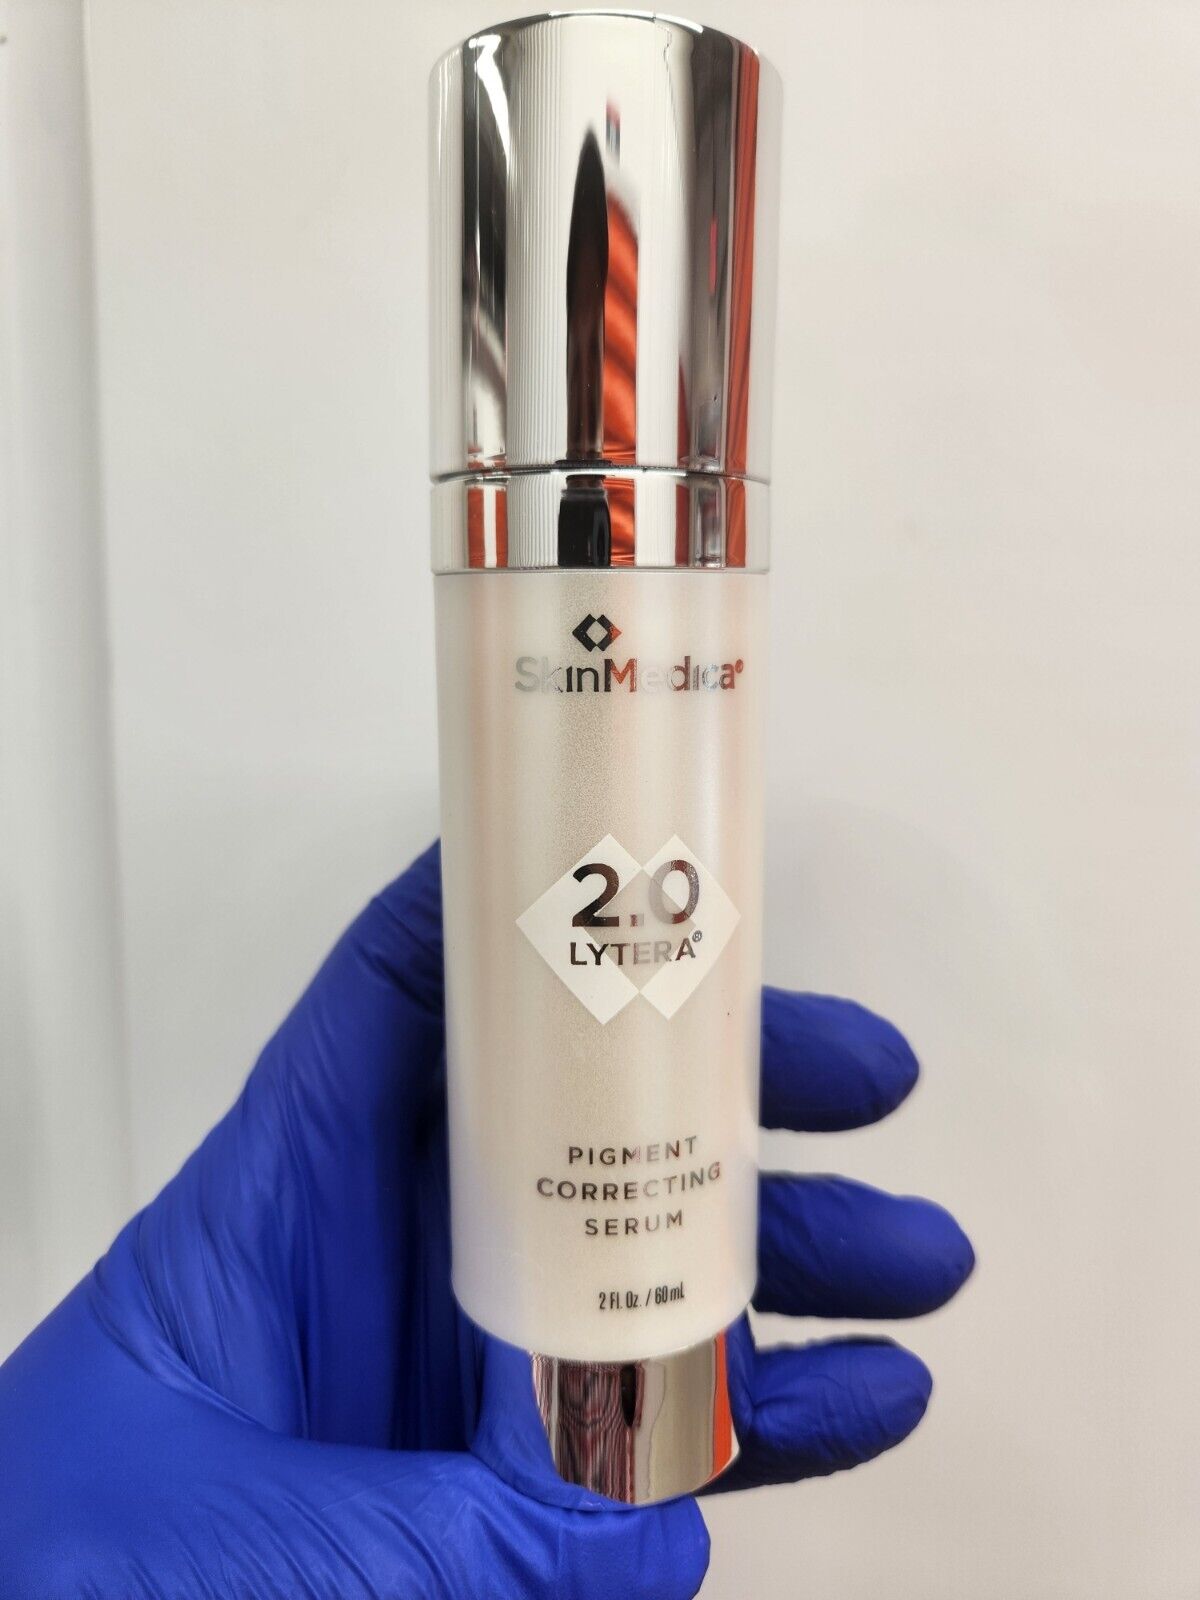 SkinMedica 2.0 LYTERA Pigment Correcting Serum 2oz - Brighten Skin Tone New Box